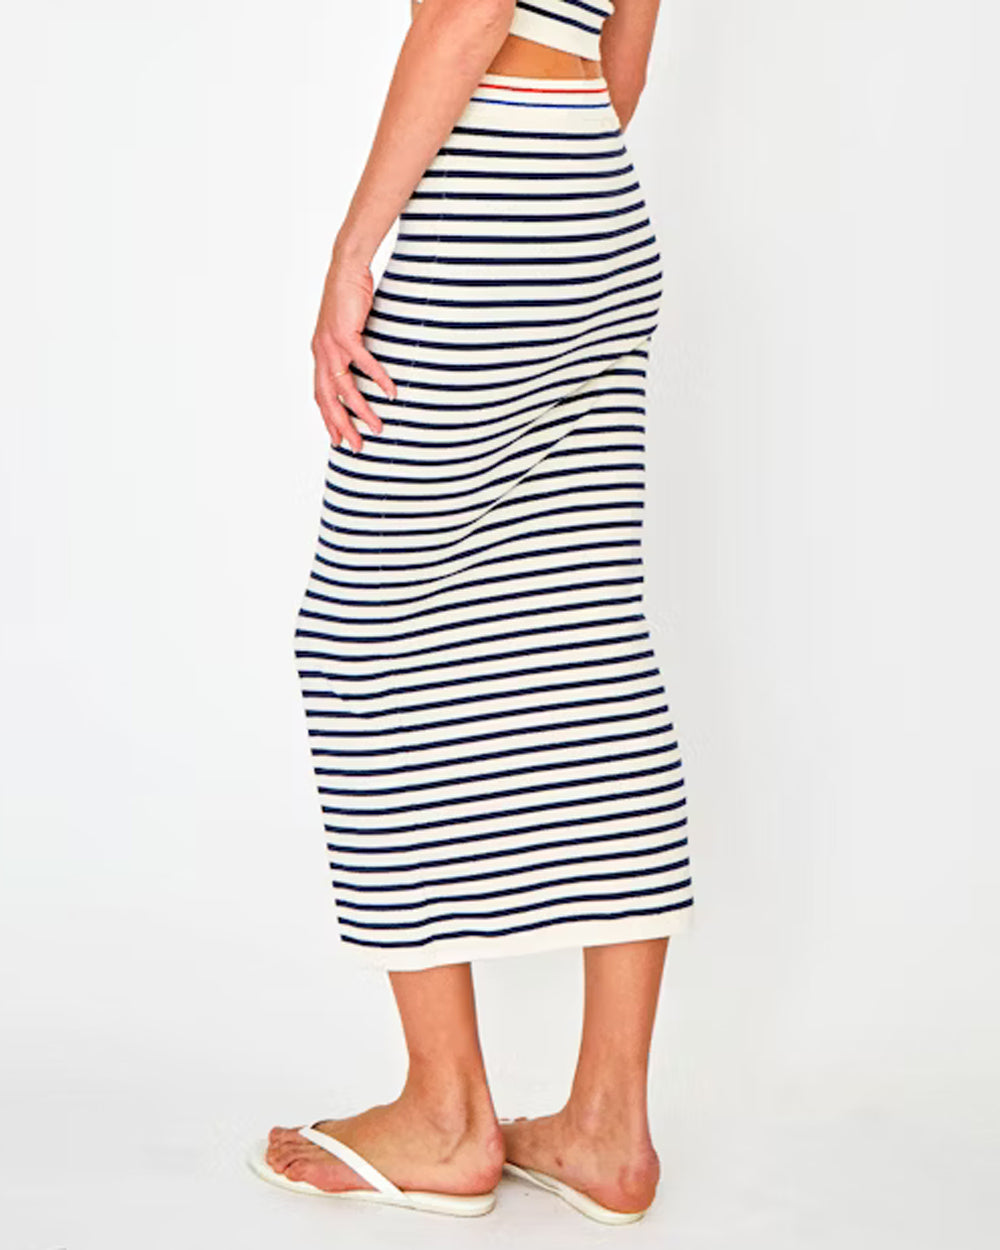 The Dee Tube Skirt in Cream and Navy Stripe